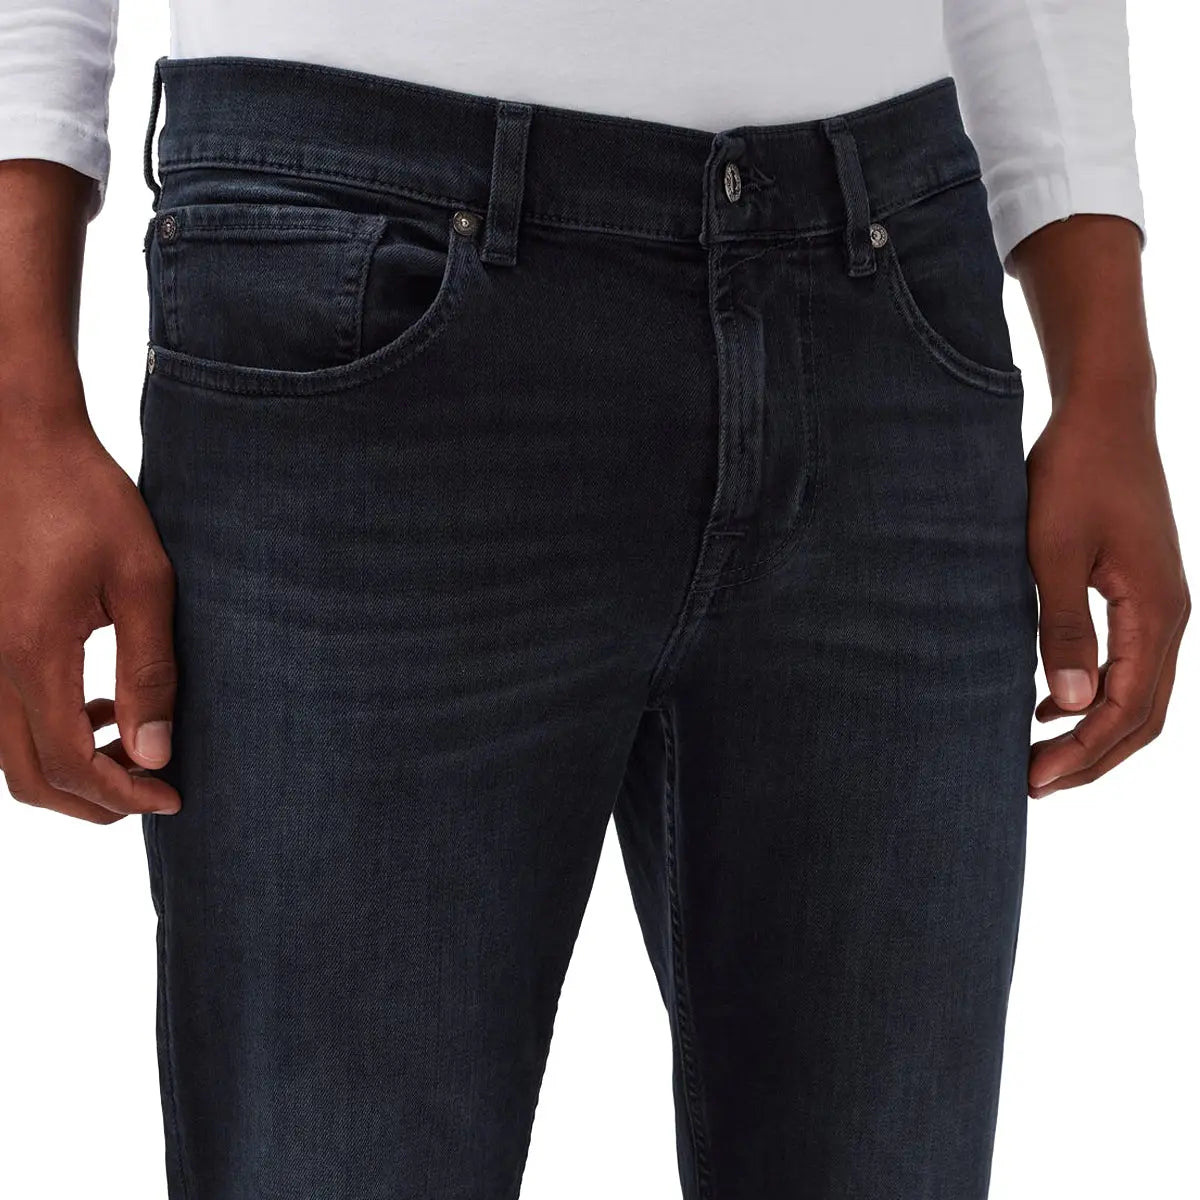 Black Slimmy Tapered Stretch Tek Principle Jeans  7 For All Mankind   